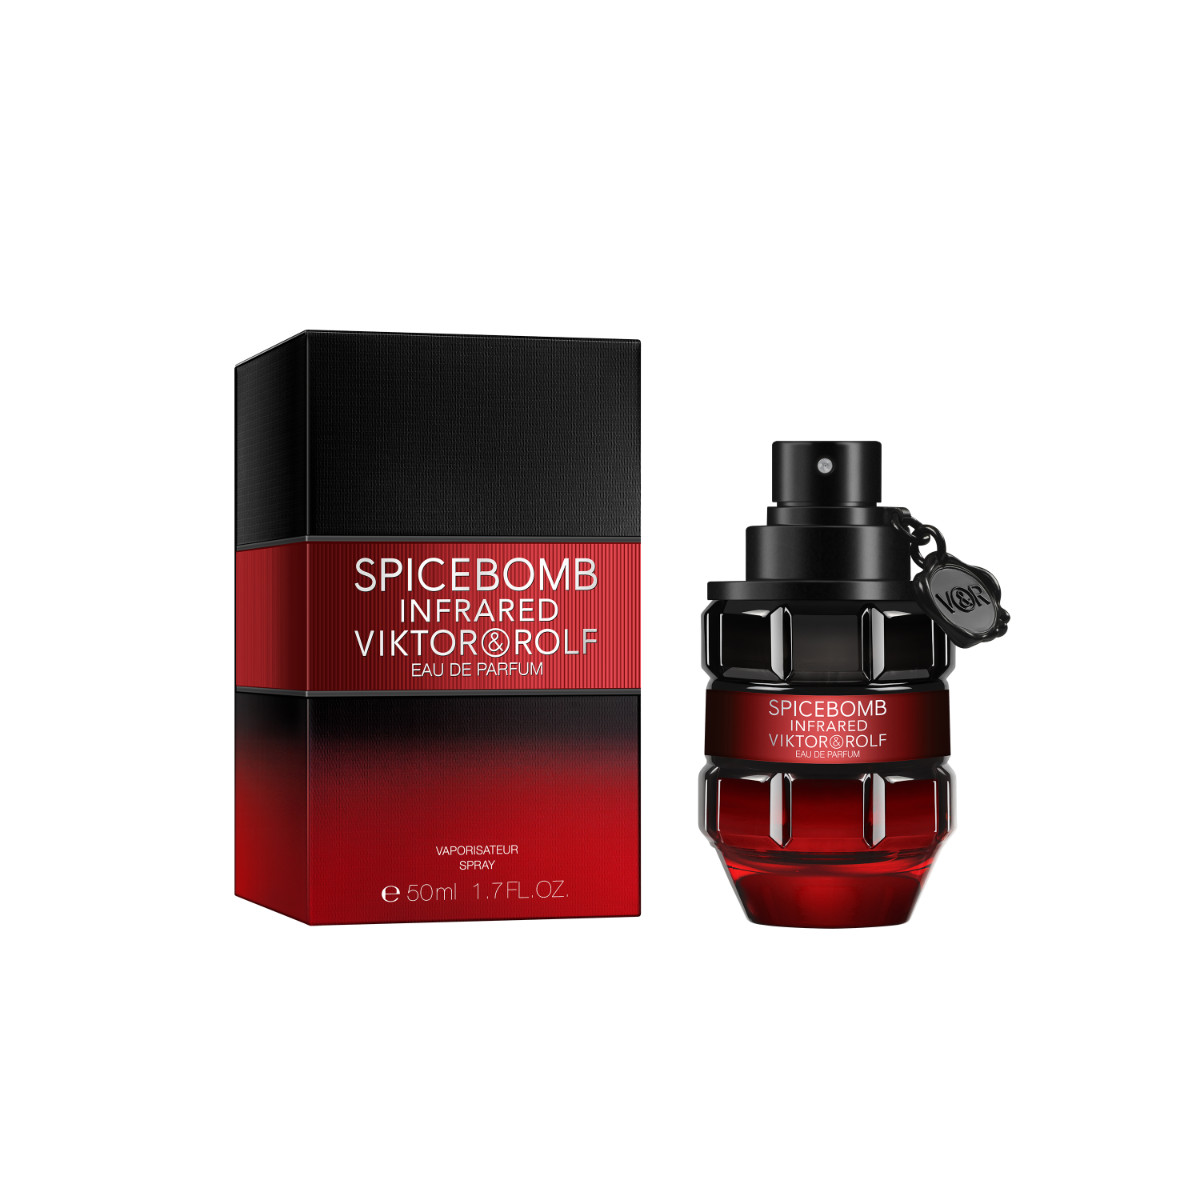 Spicebomb Infrared: The New Eau De Parfum By Viktor&Rolf